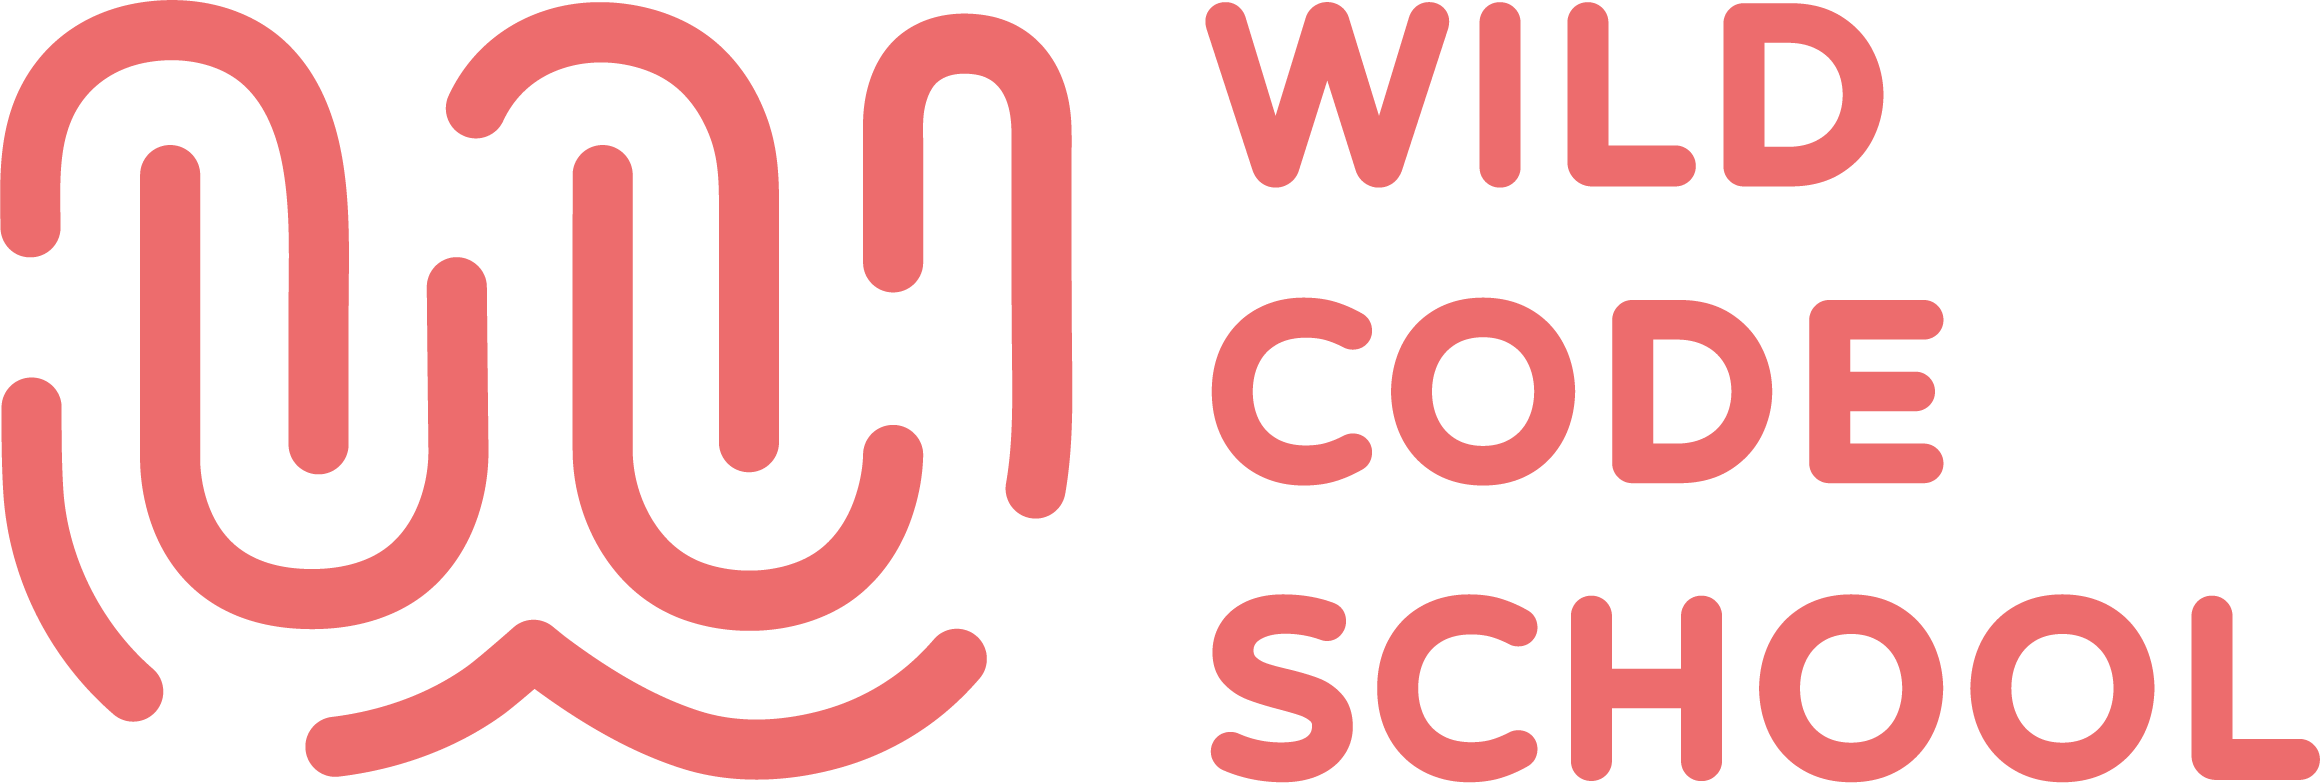 Wild Code School Front-End Web Development Course logo